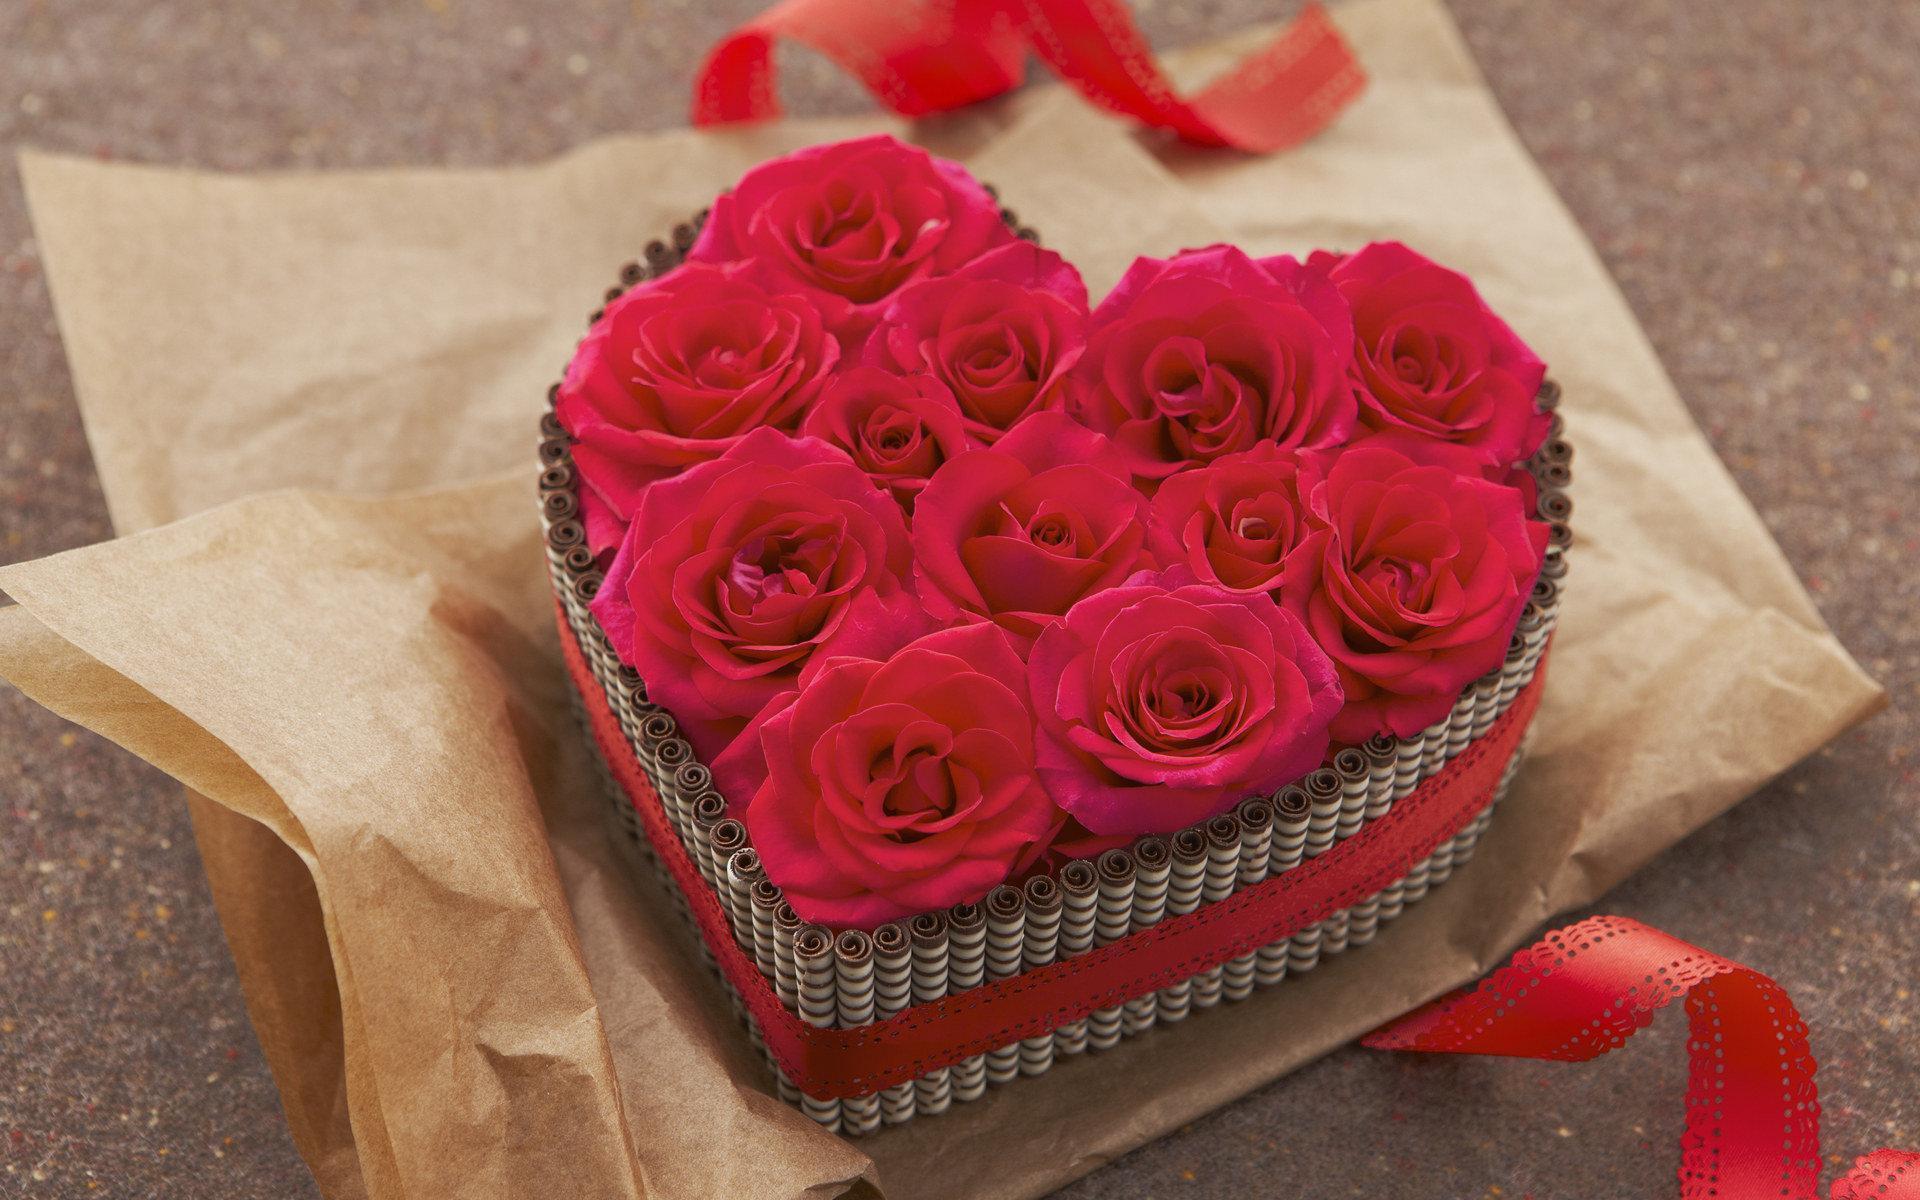 Romantic Roses - Roses Wallpaper (13966433) - Fanpop